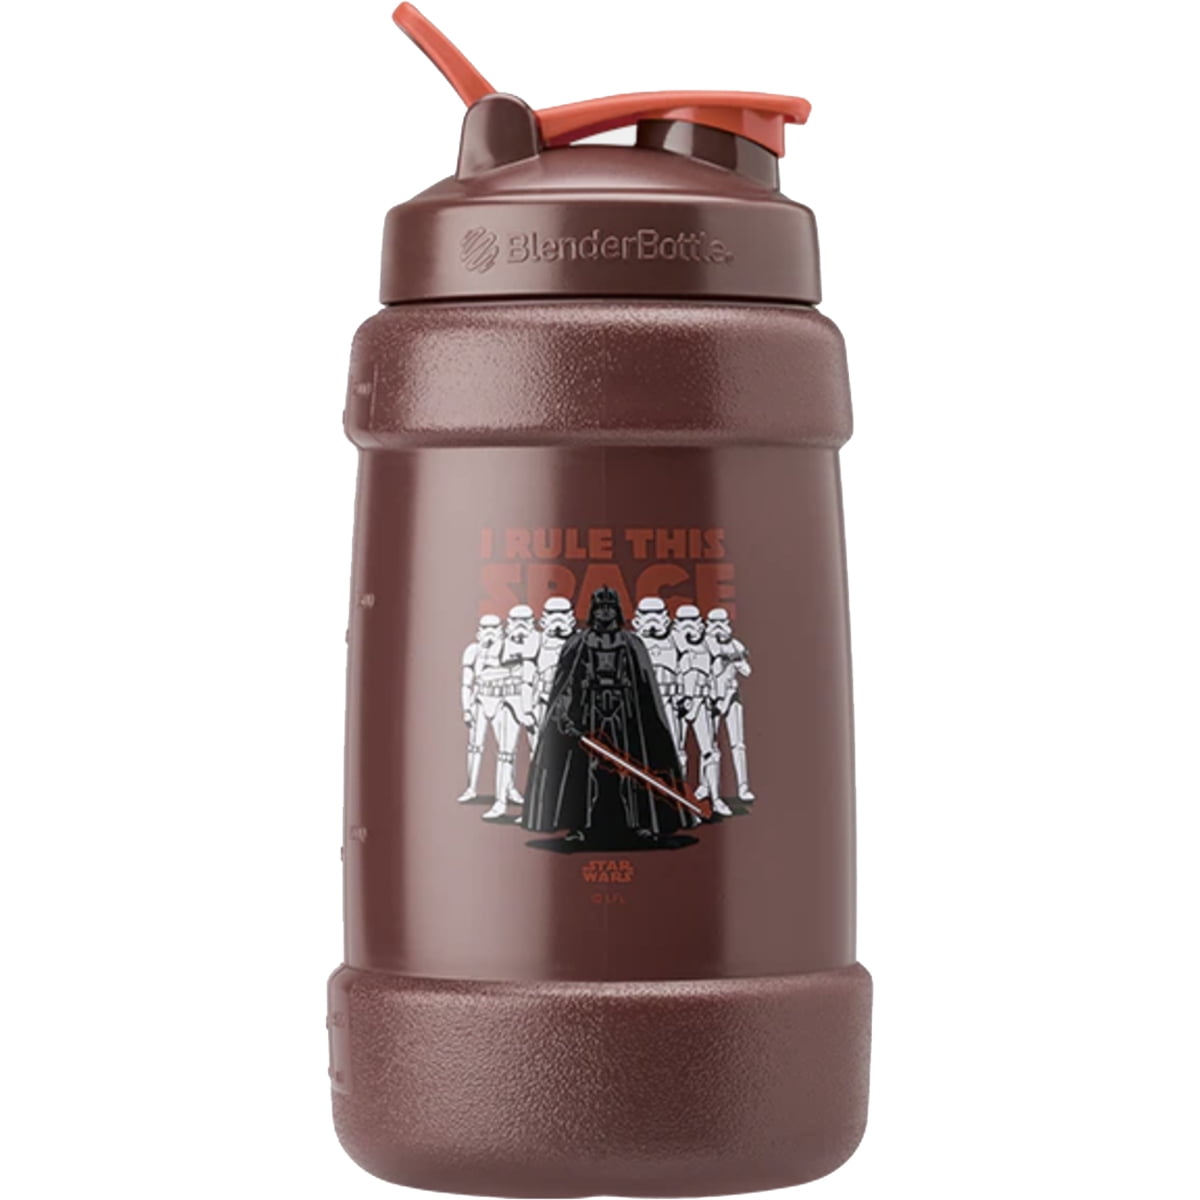 Blender Bottle Star Wars Koda 2.2L Hydration Water Jug - I Rule This Space